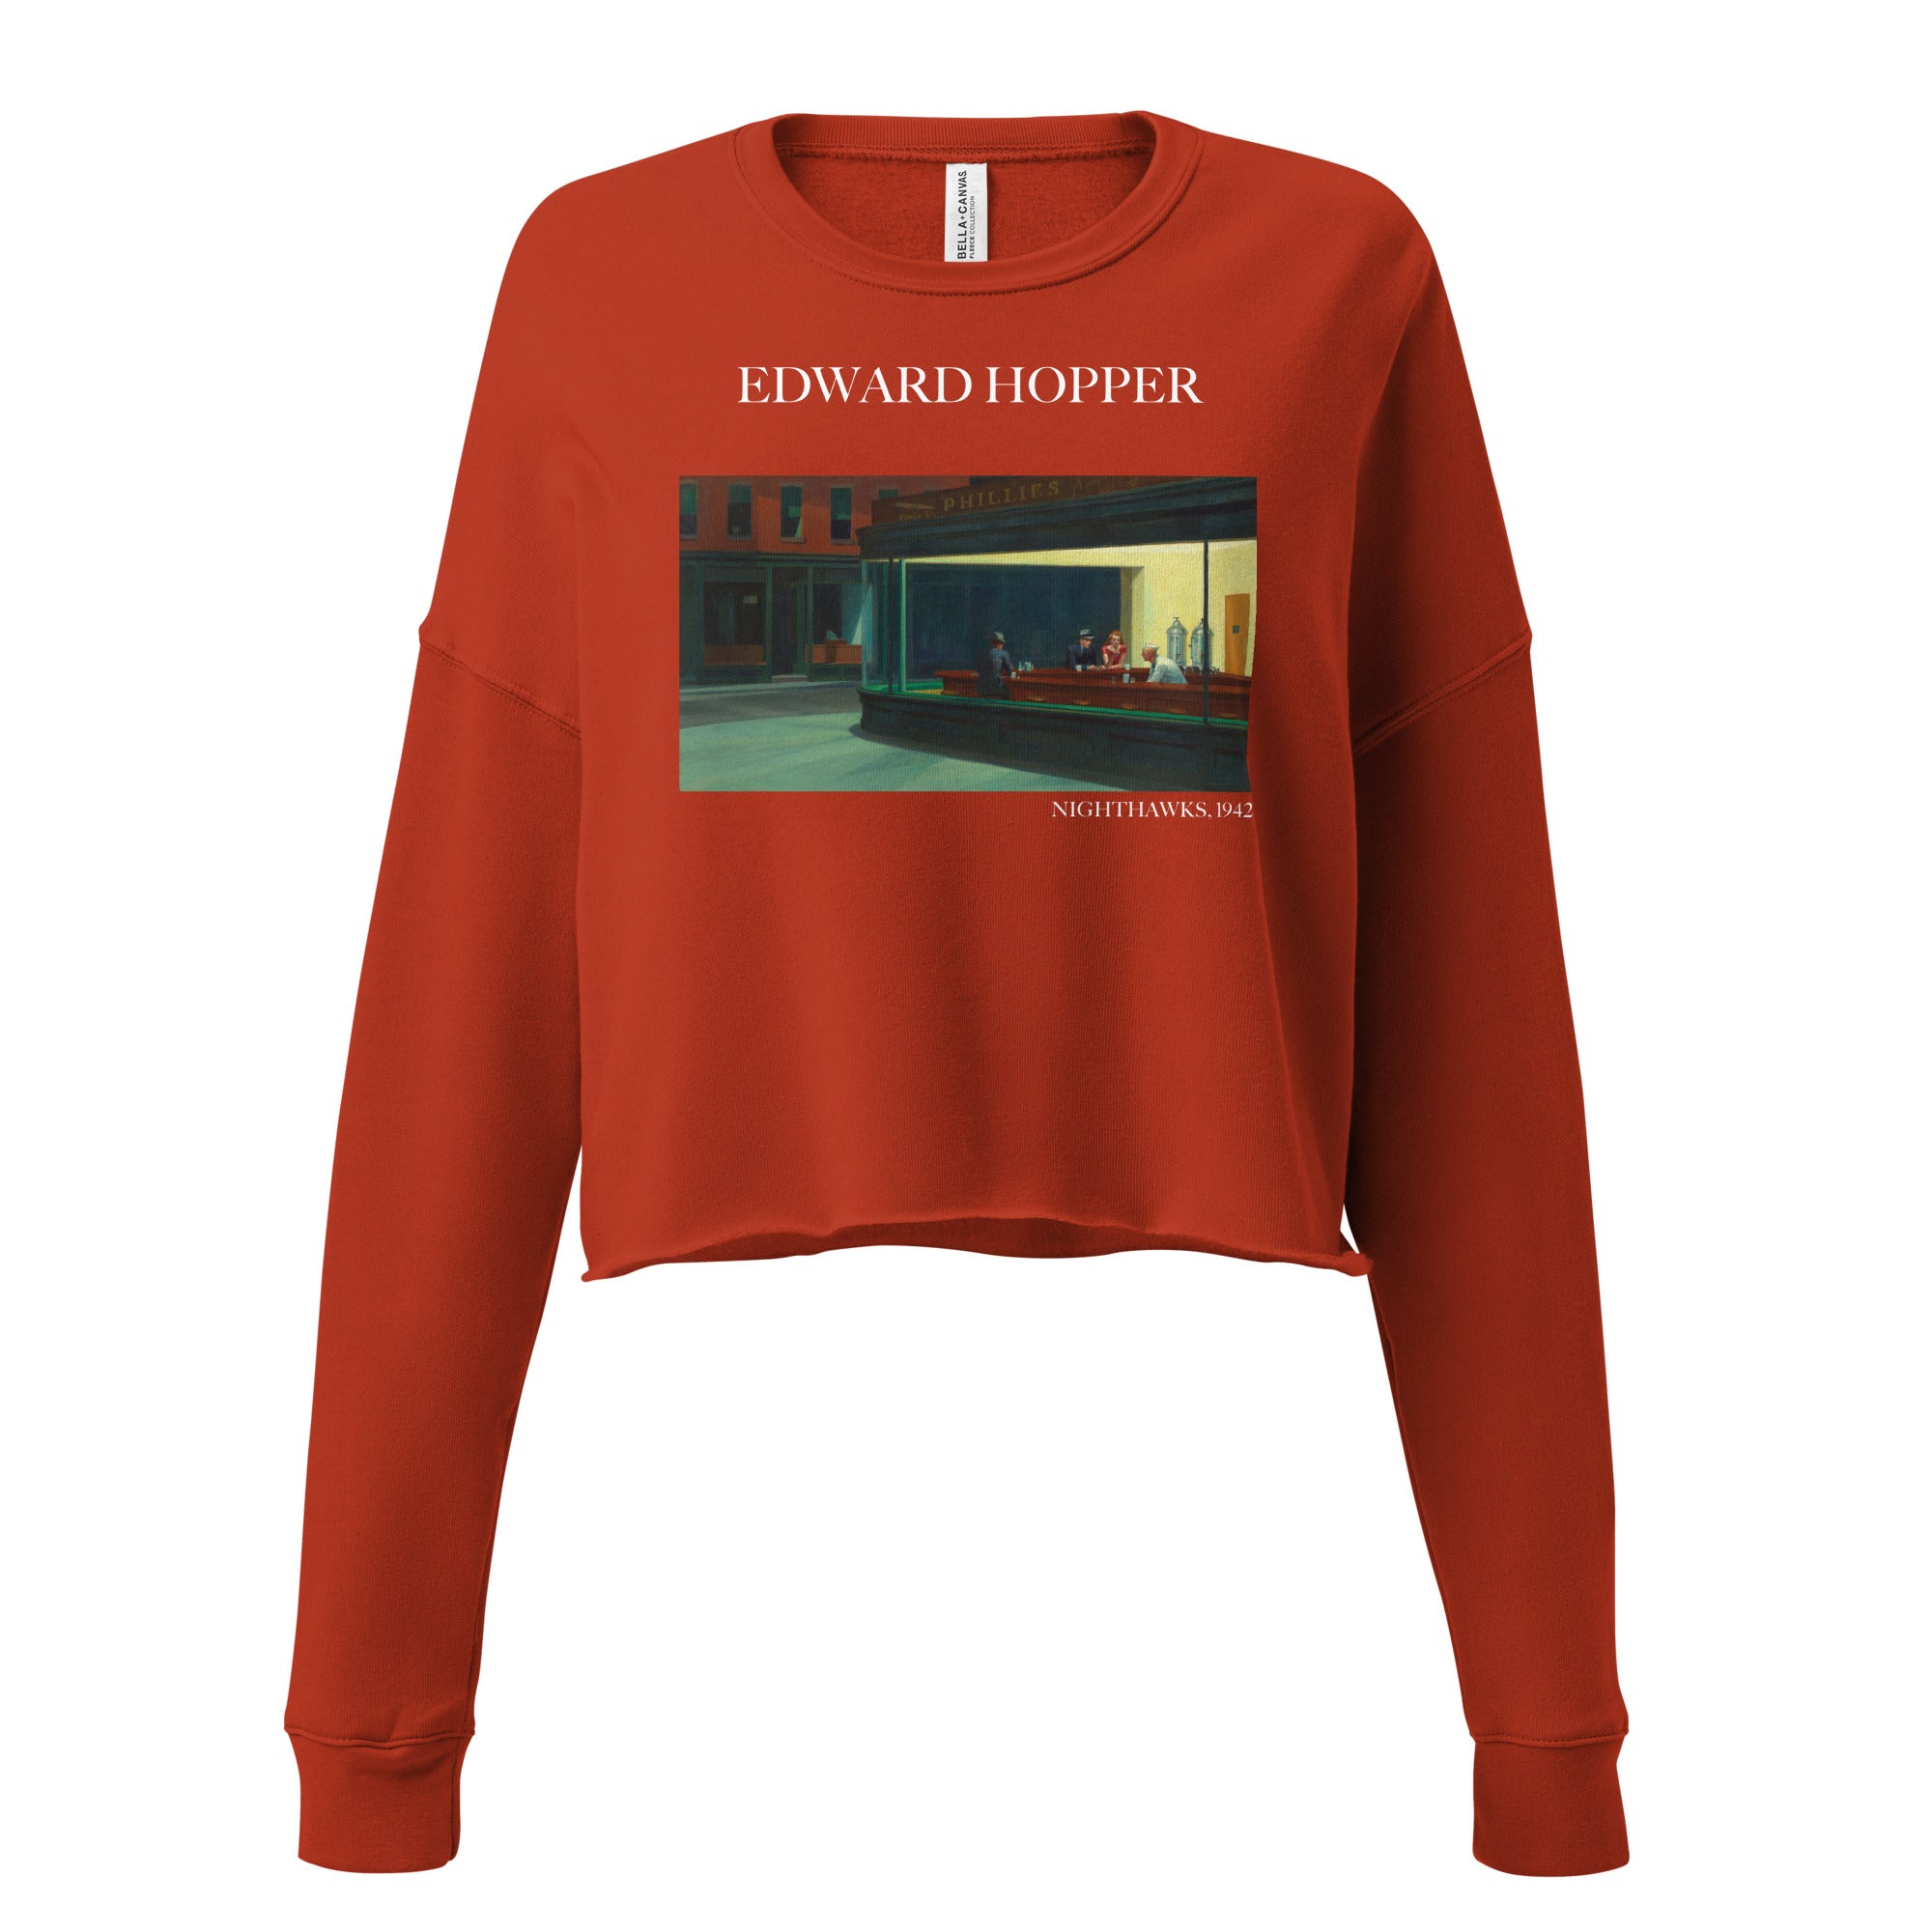 Edward Hopper „Nighthawks“ – Kurzes Sweatshirt mit berühmtem Gemälde | Kurzes Sweatshirt mit Premium-Kunstmotiv